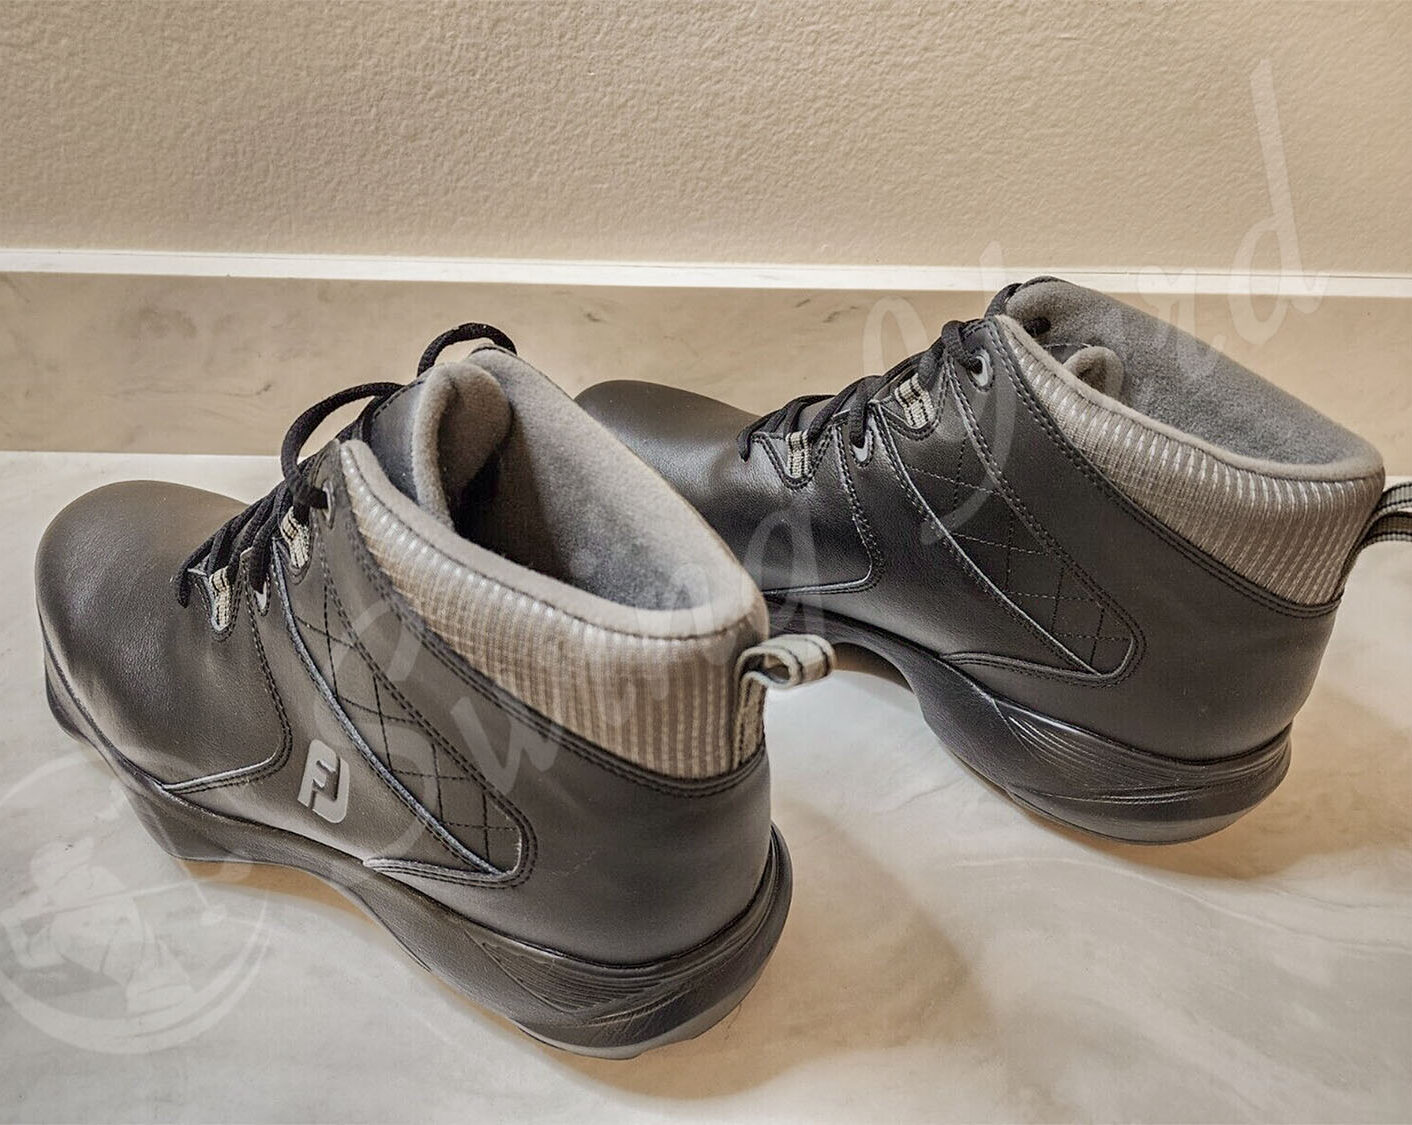 A pair Footjoy cascade spiked golf Boots on the floor